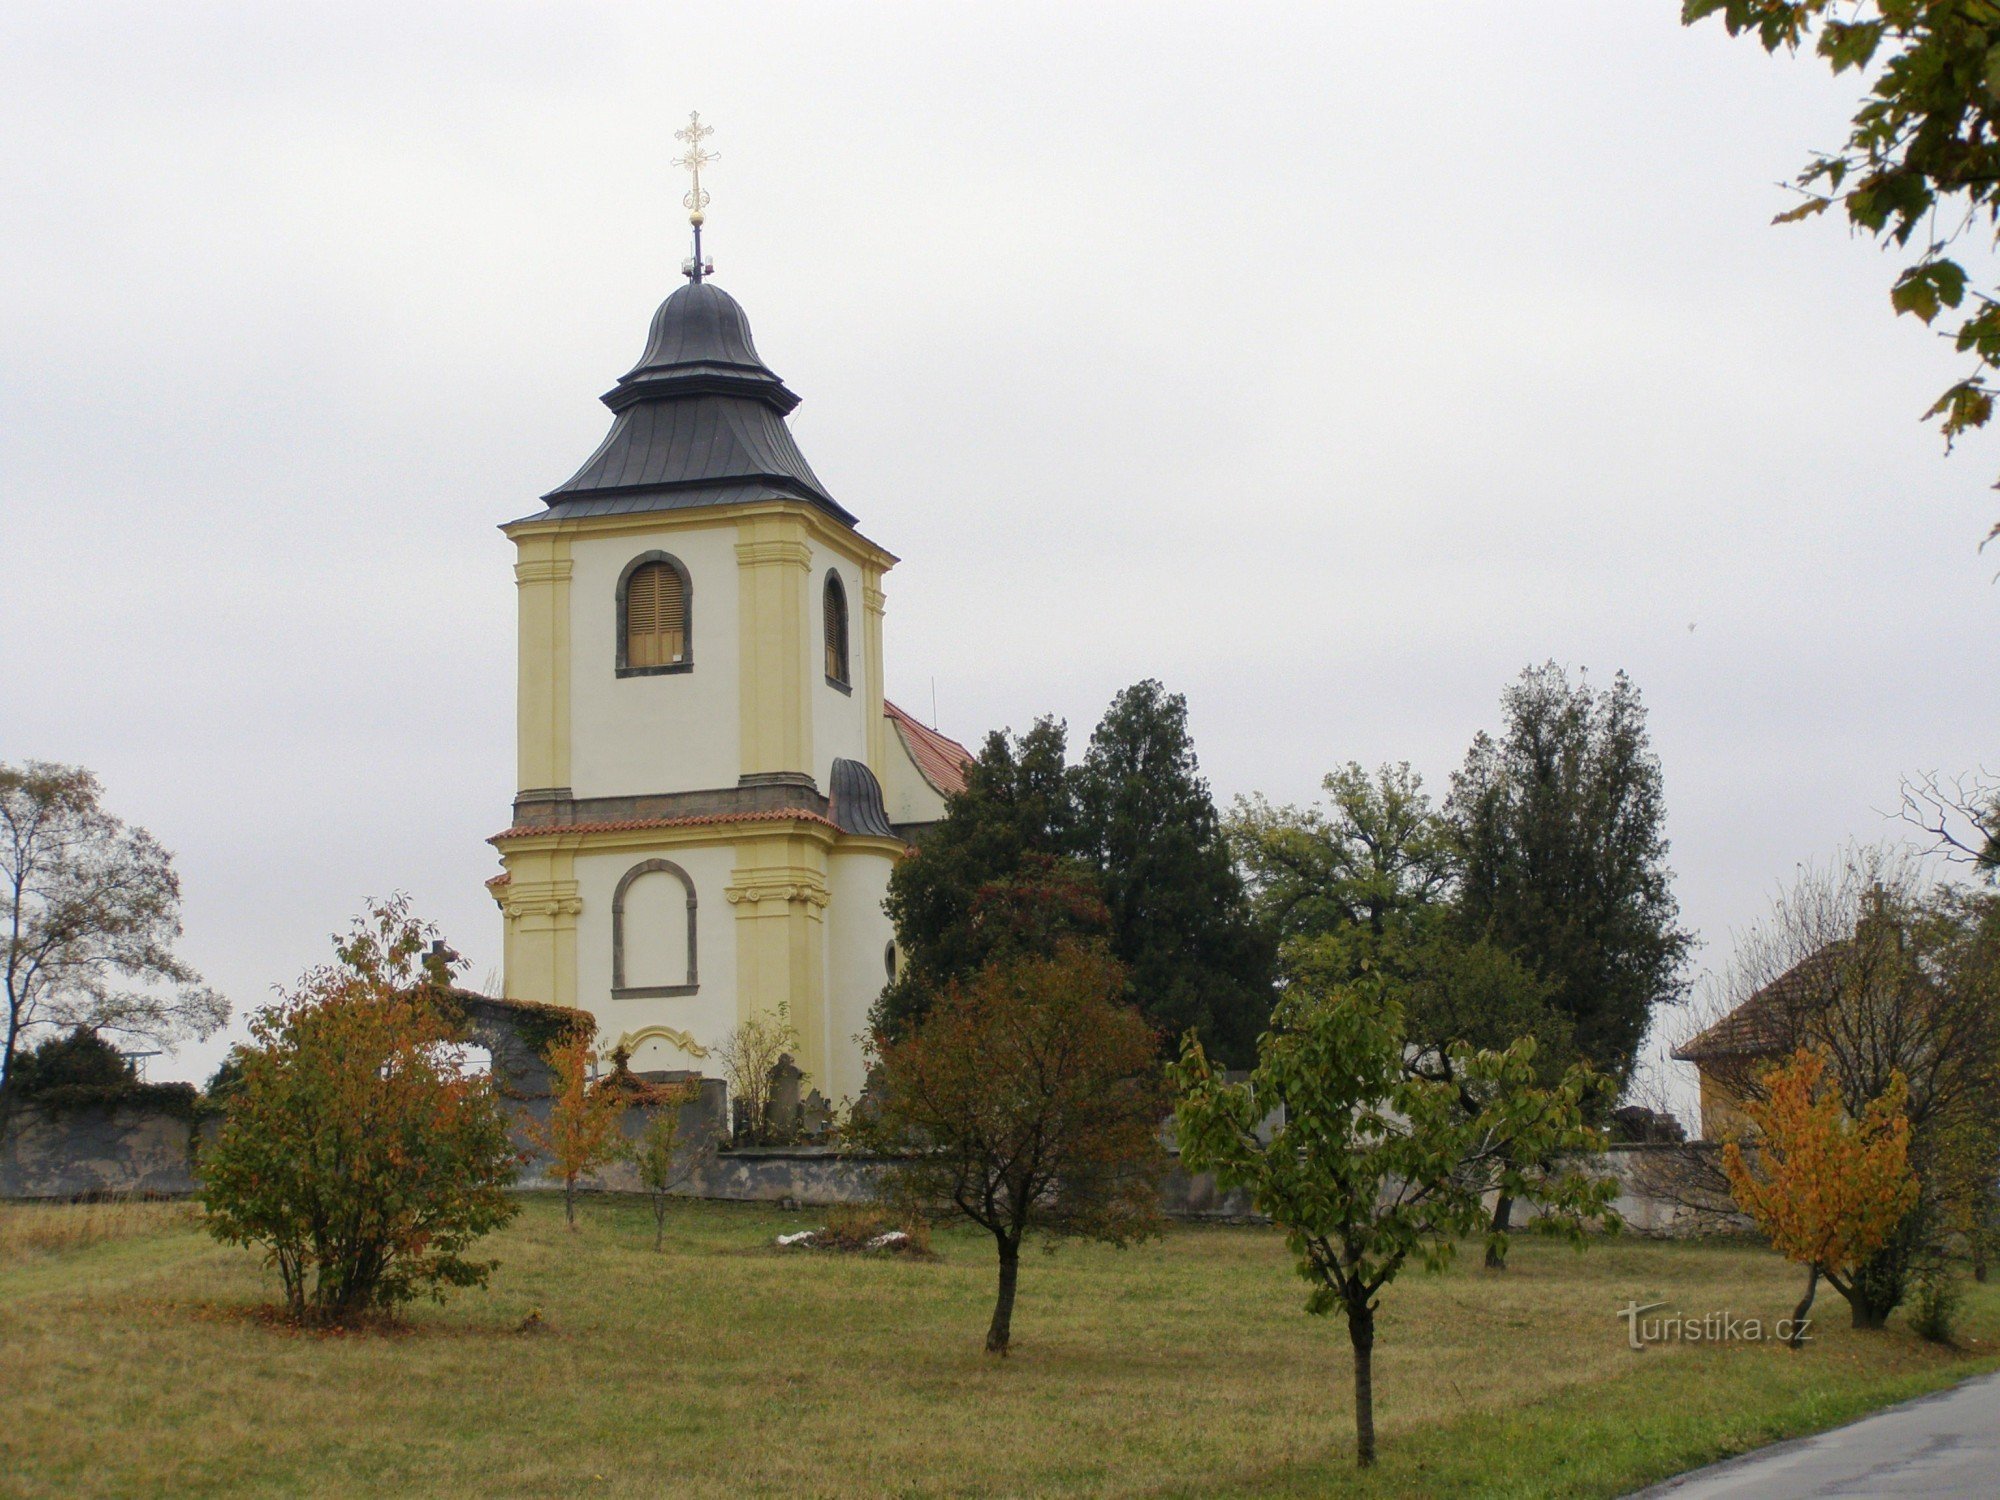 Mikulovice - Kerk van St. Wenceslas